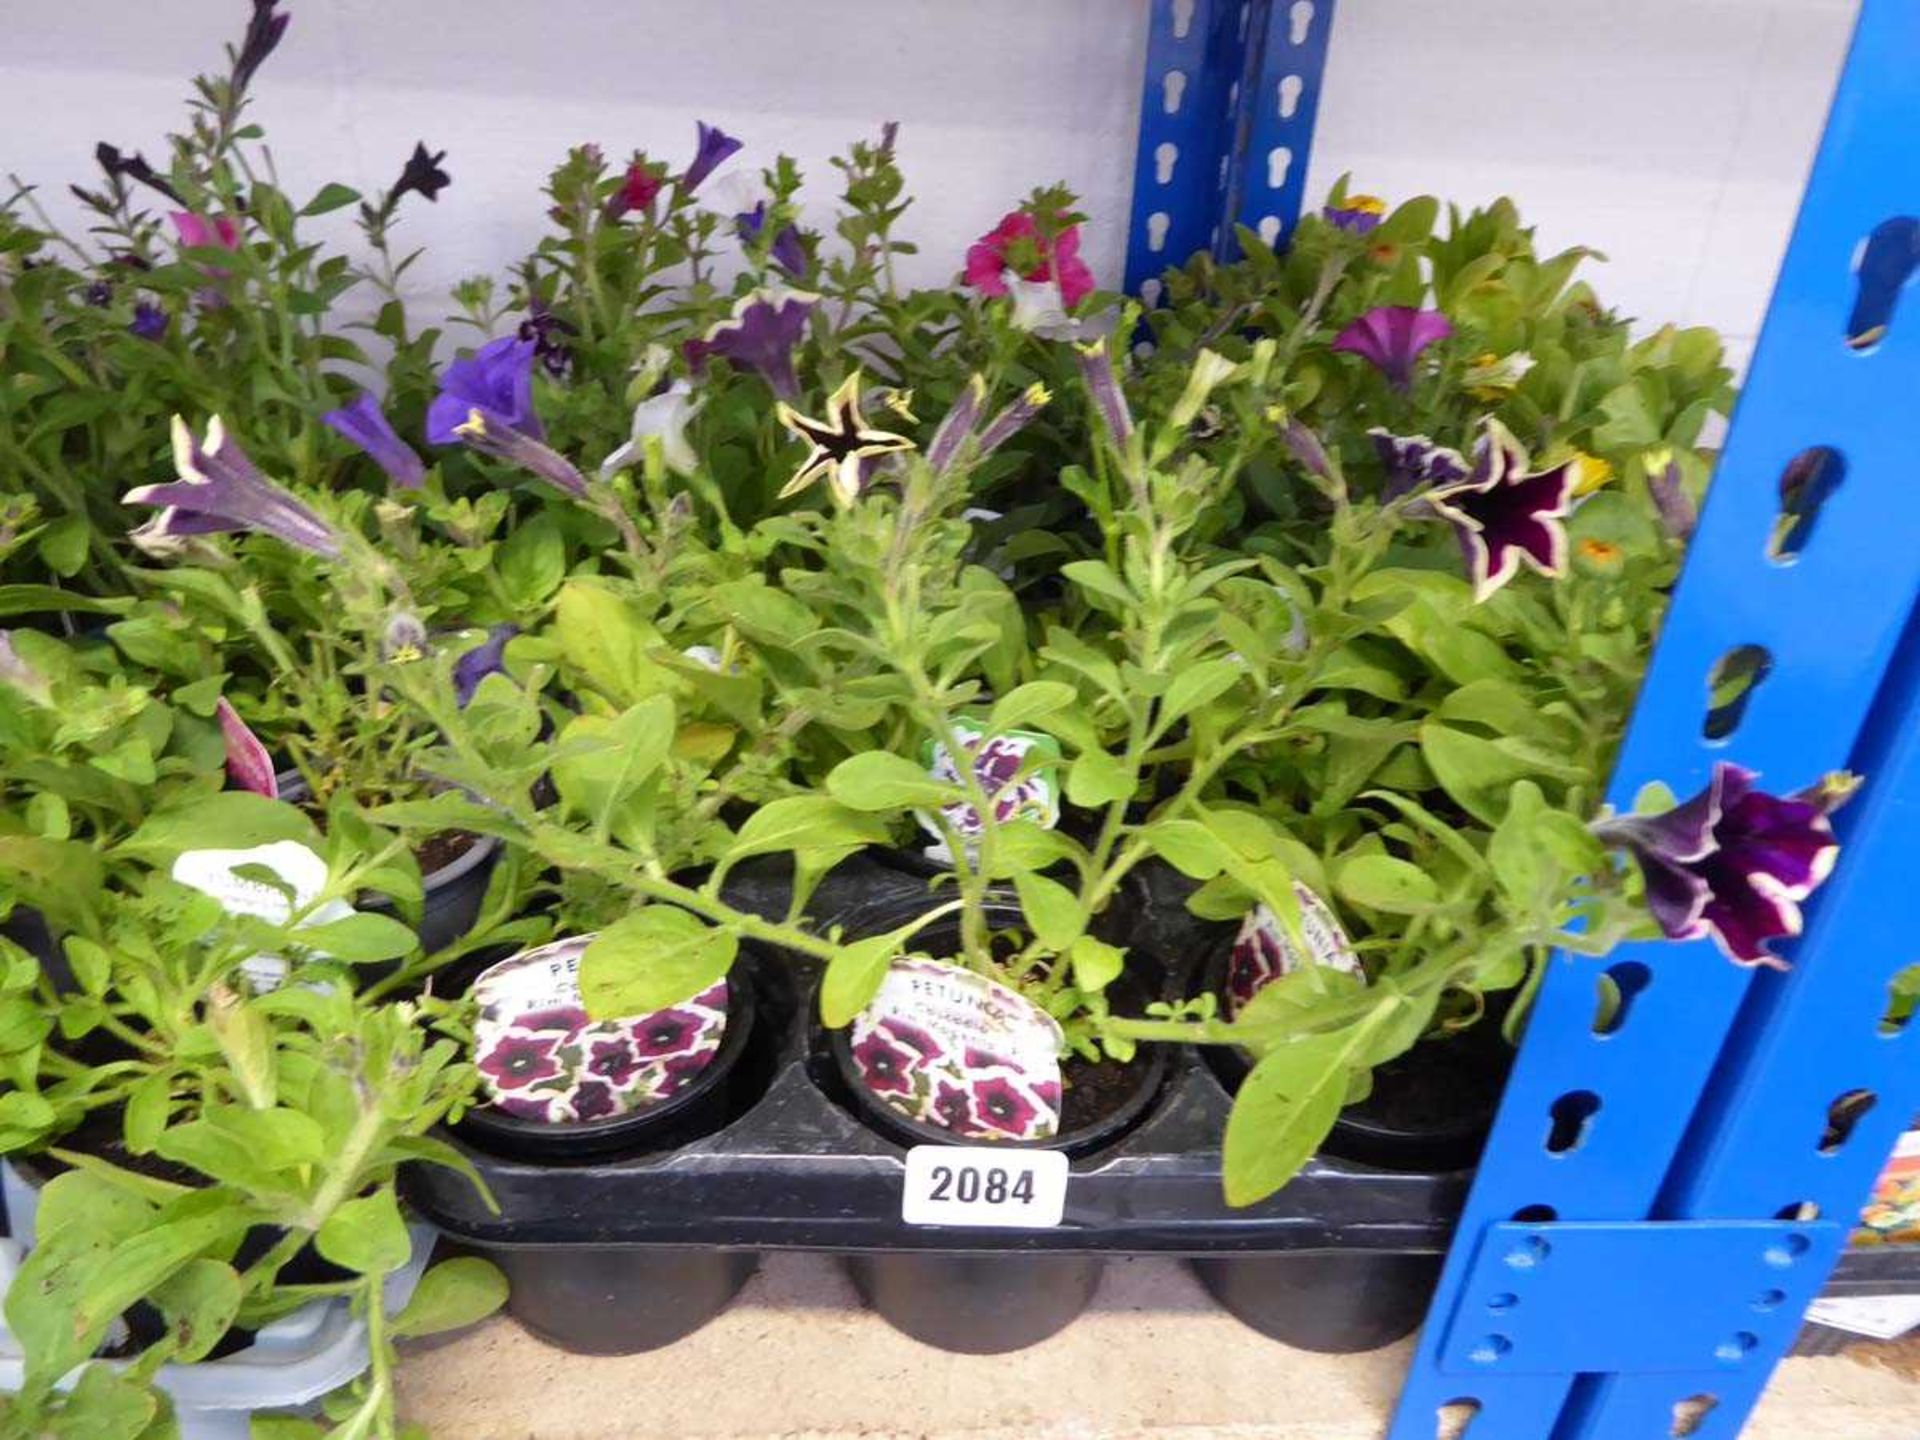 Tray containing 15 pots of mixed petunias